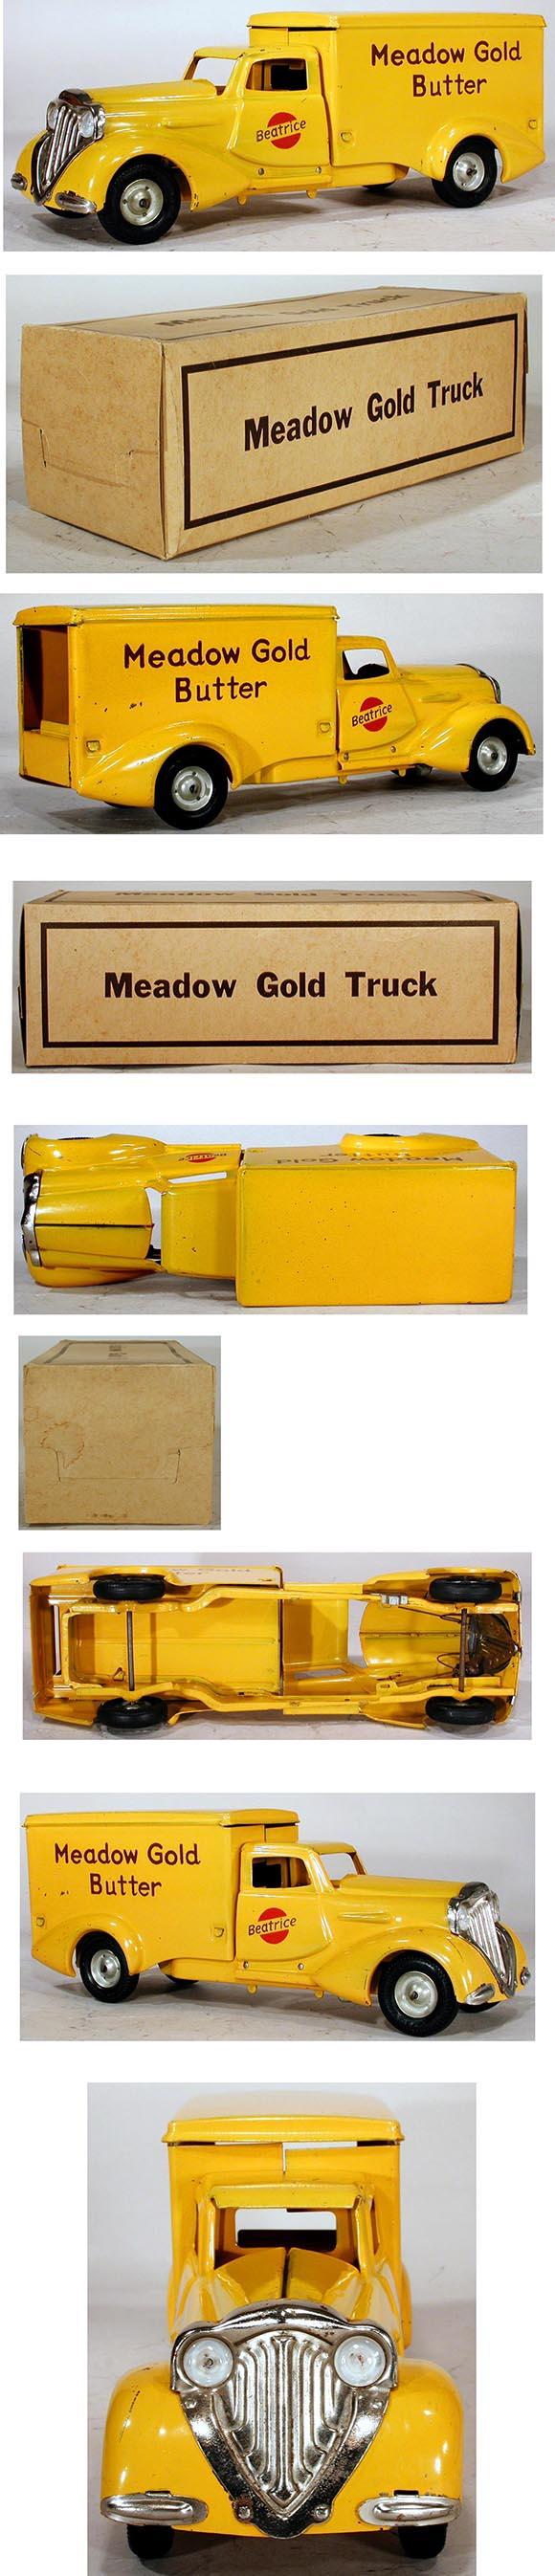 1935 Metalcraft, Beatrice Meadow Gold Butter Truck in Original Box